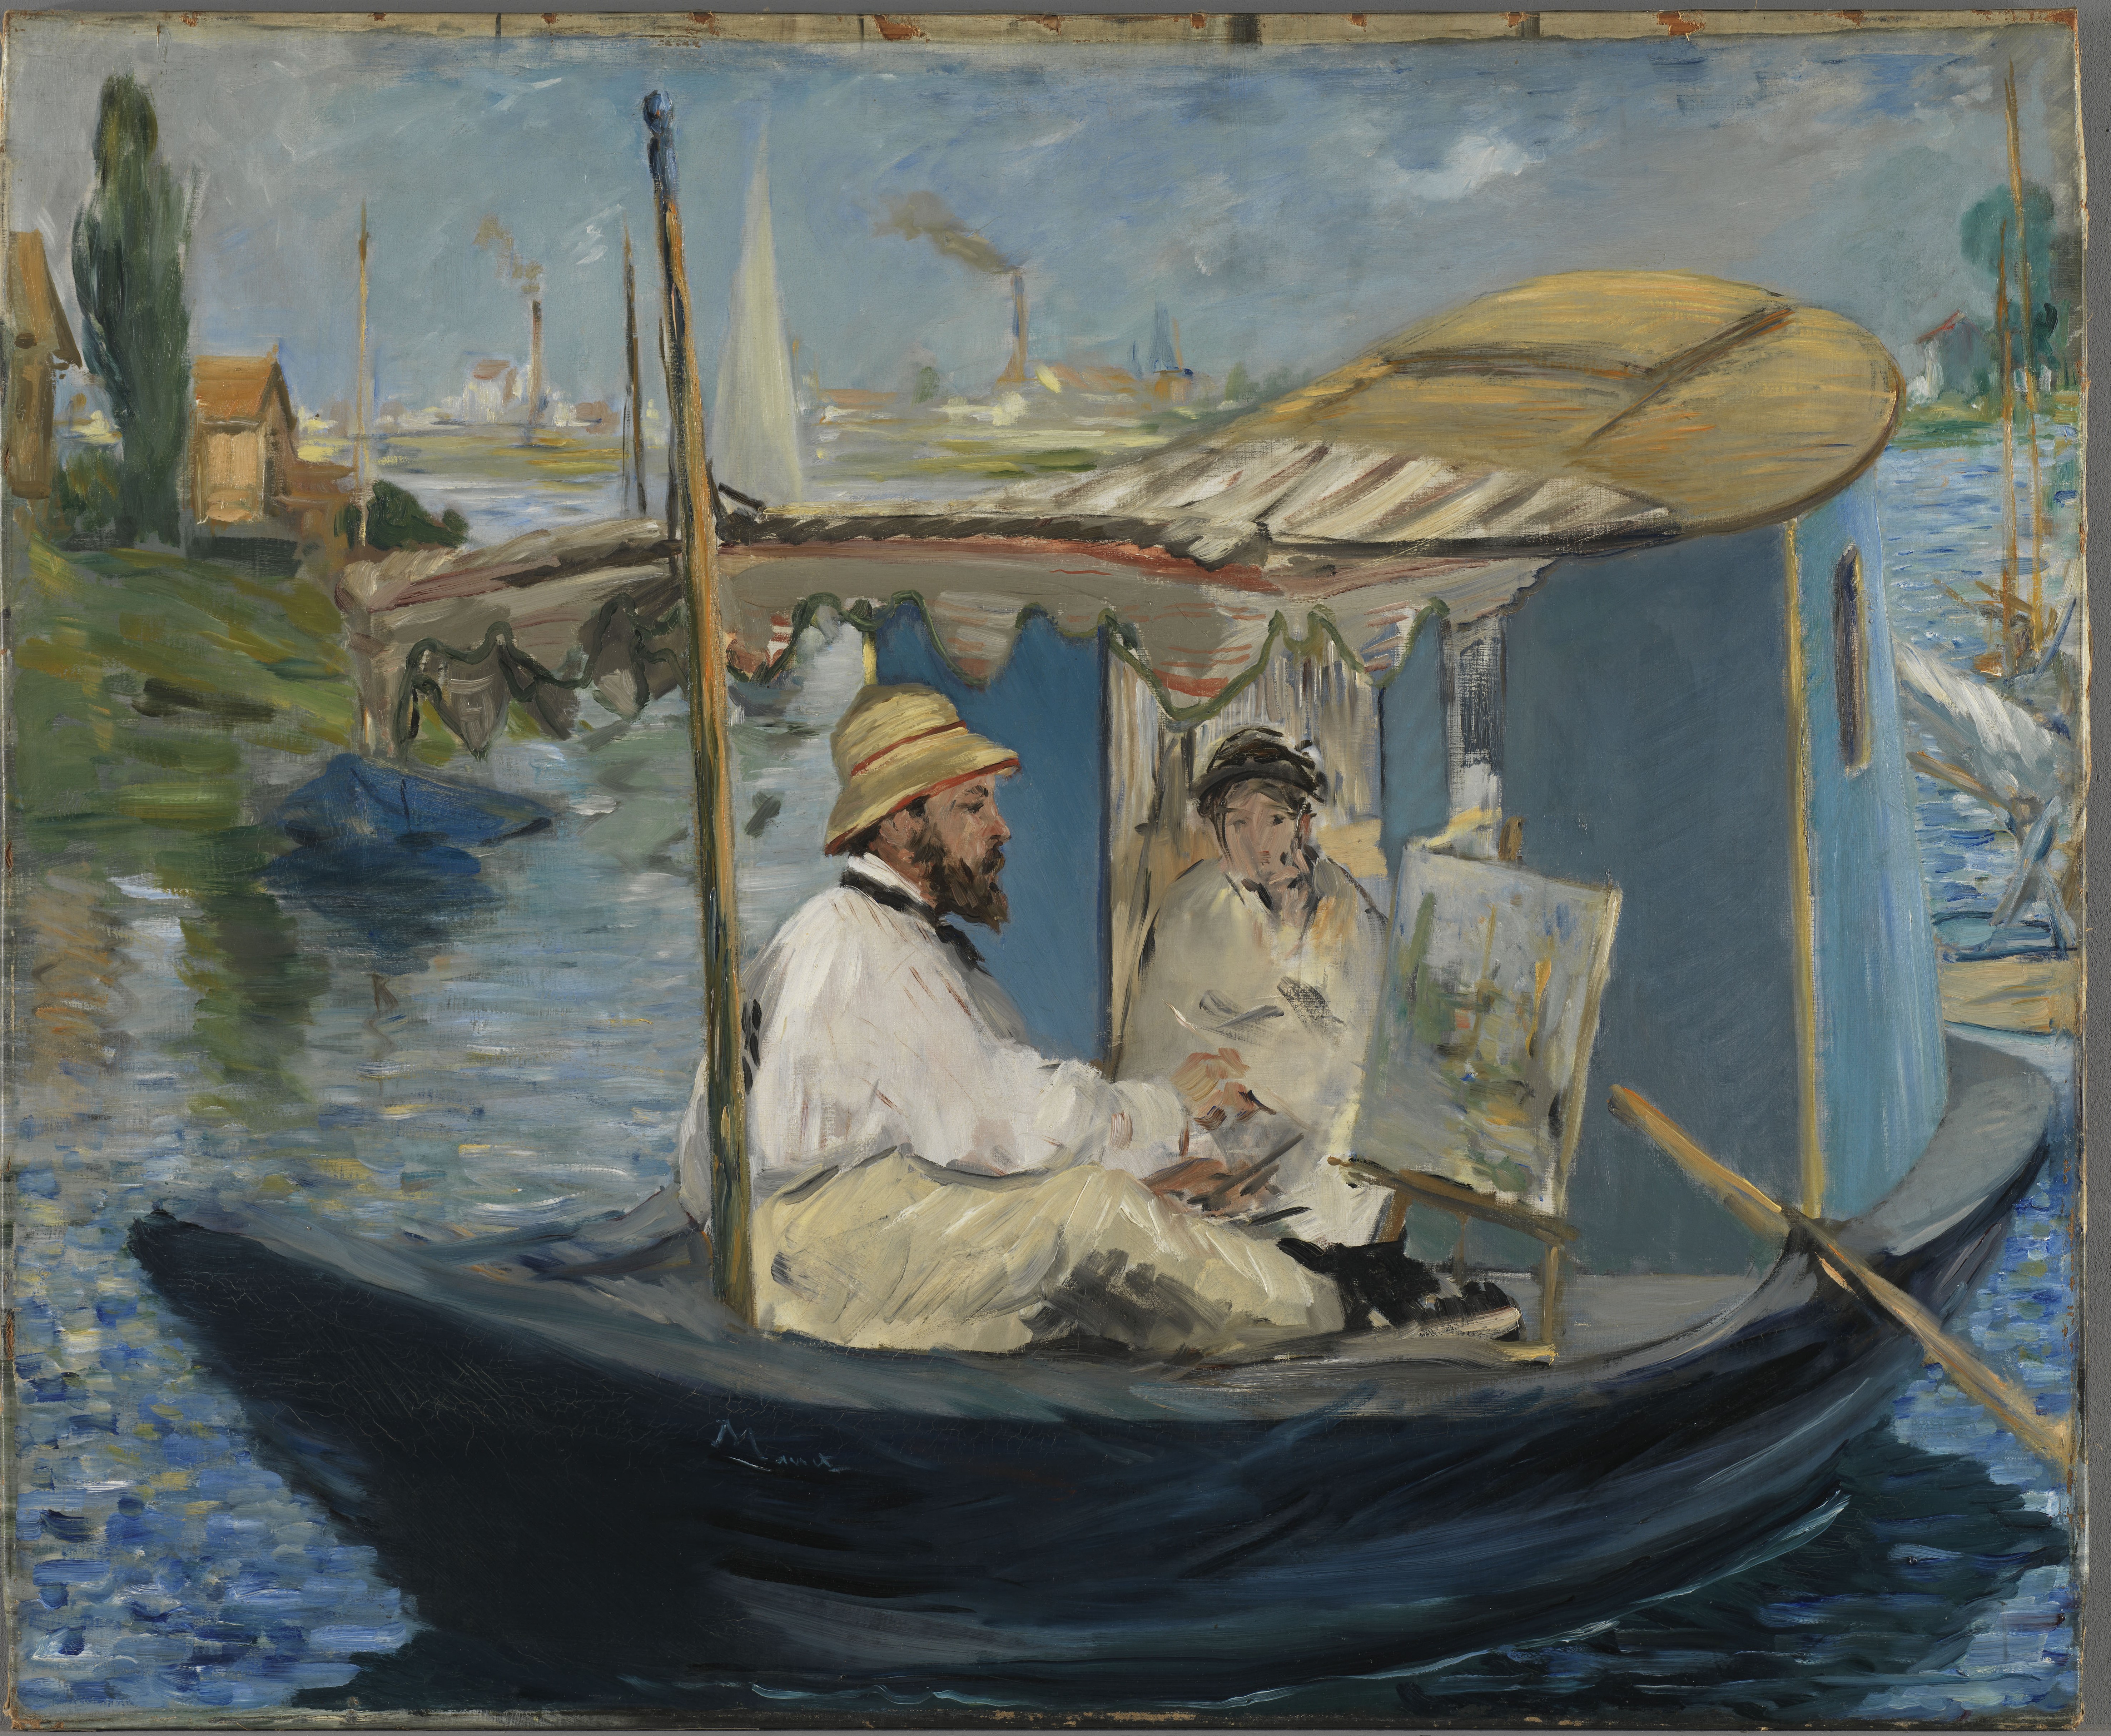 O Barco by Édouard Manet - 1874 - 82,7 x 105 cm 